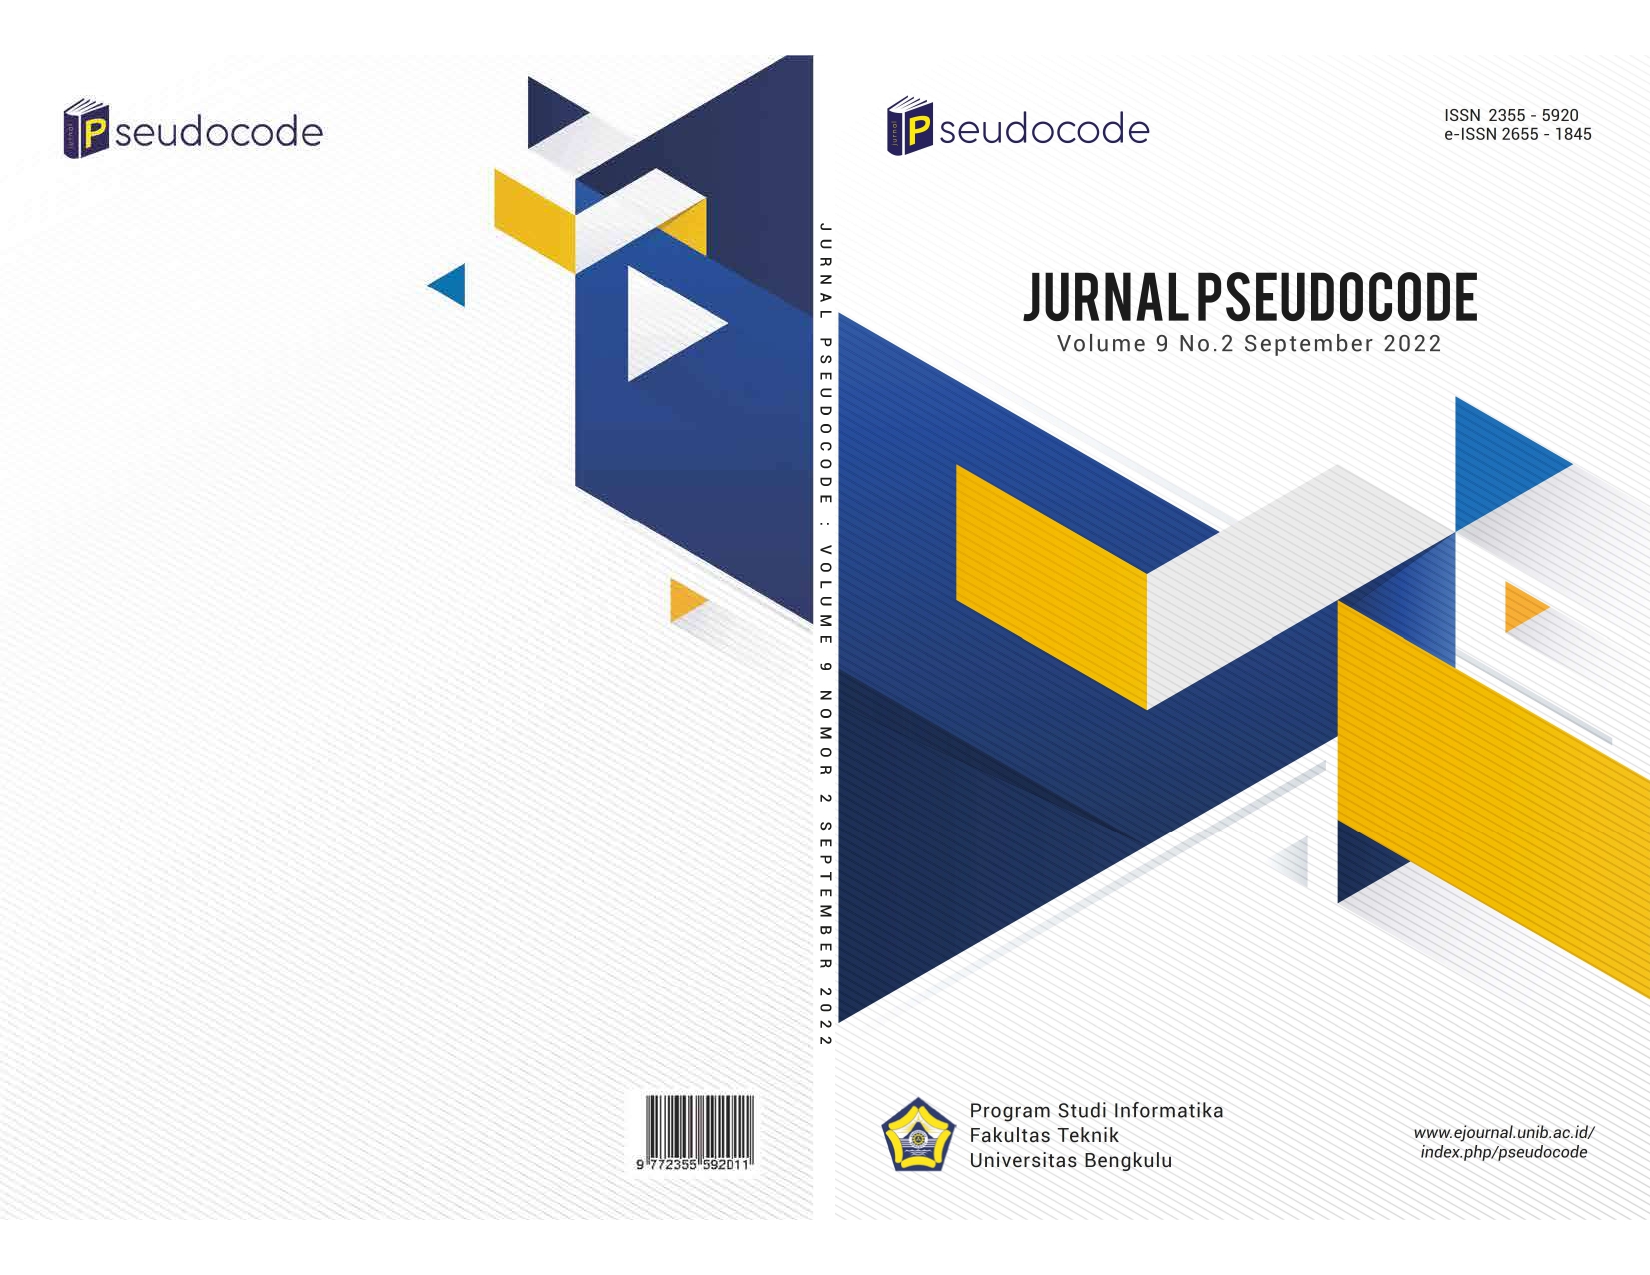 Cover Pseudocode Volume 9 Nomor 2 September 2022